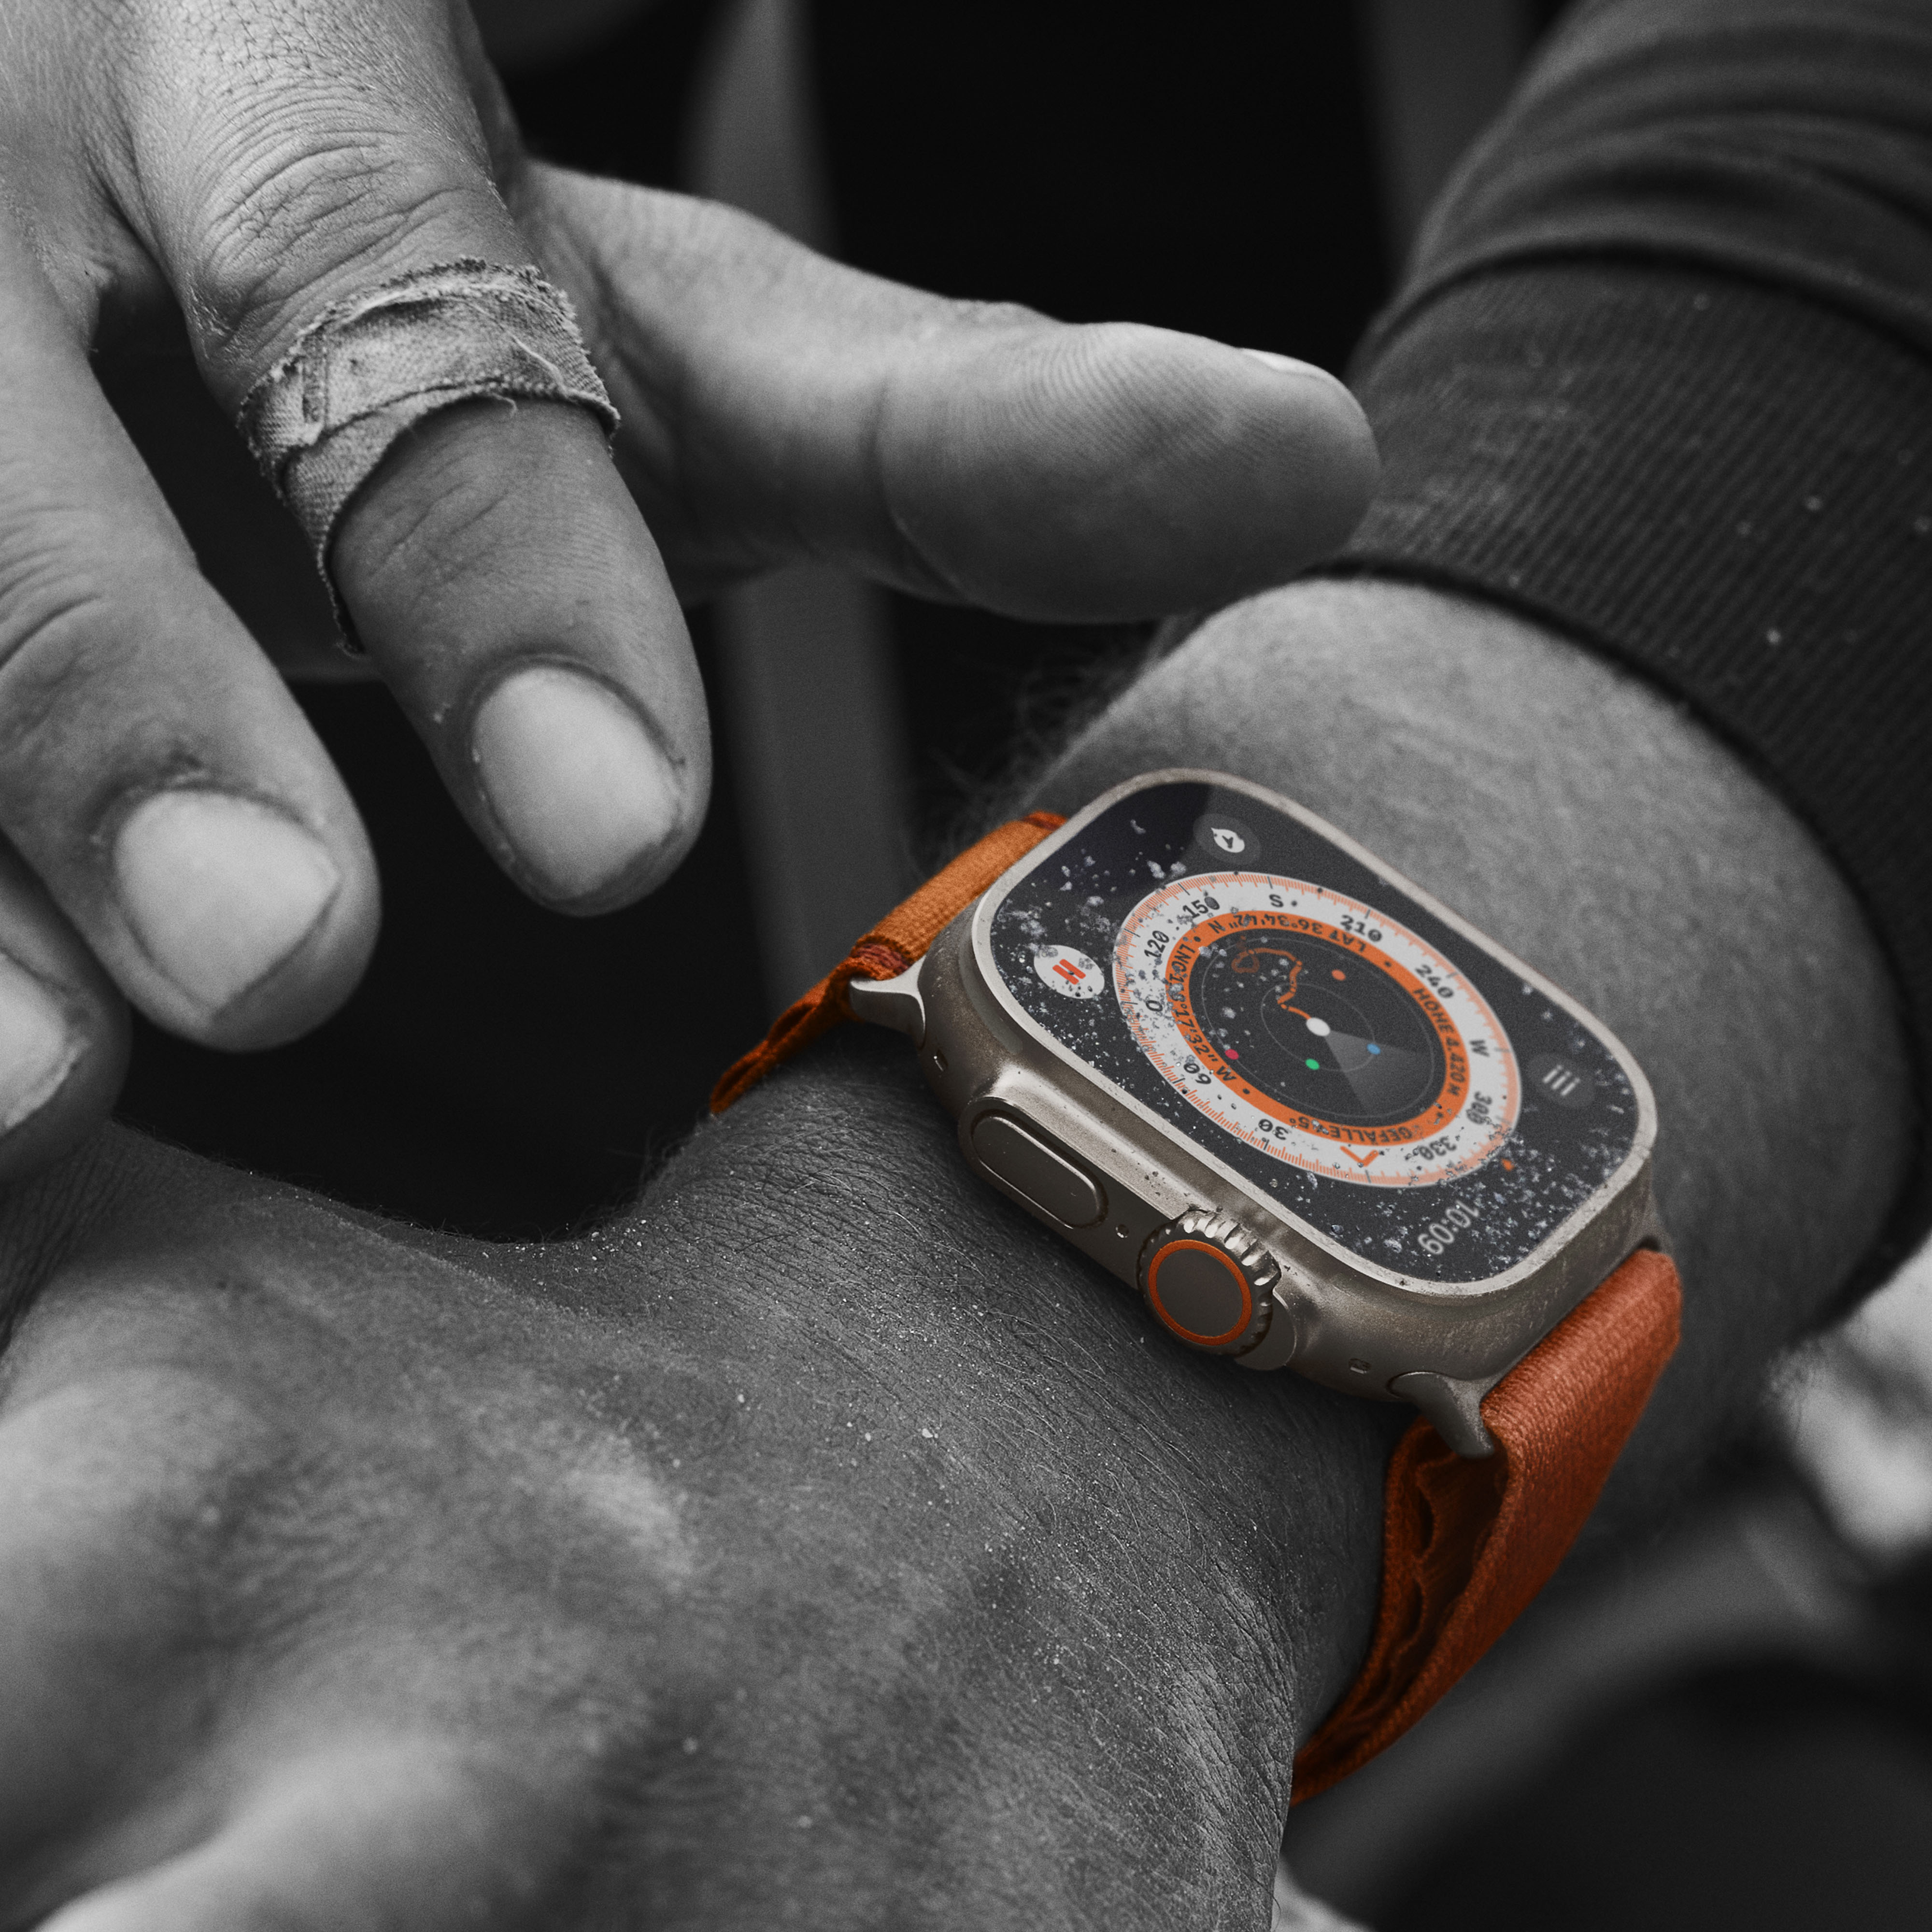 Watch Smartwatch Gewebe, - MEDIUM Orange 145 Titan mm, 49 190 W TIT Ultra GPS+CEL APPLE